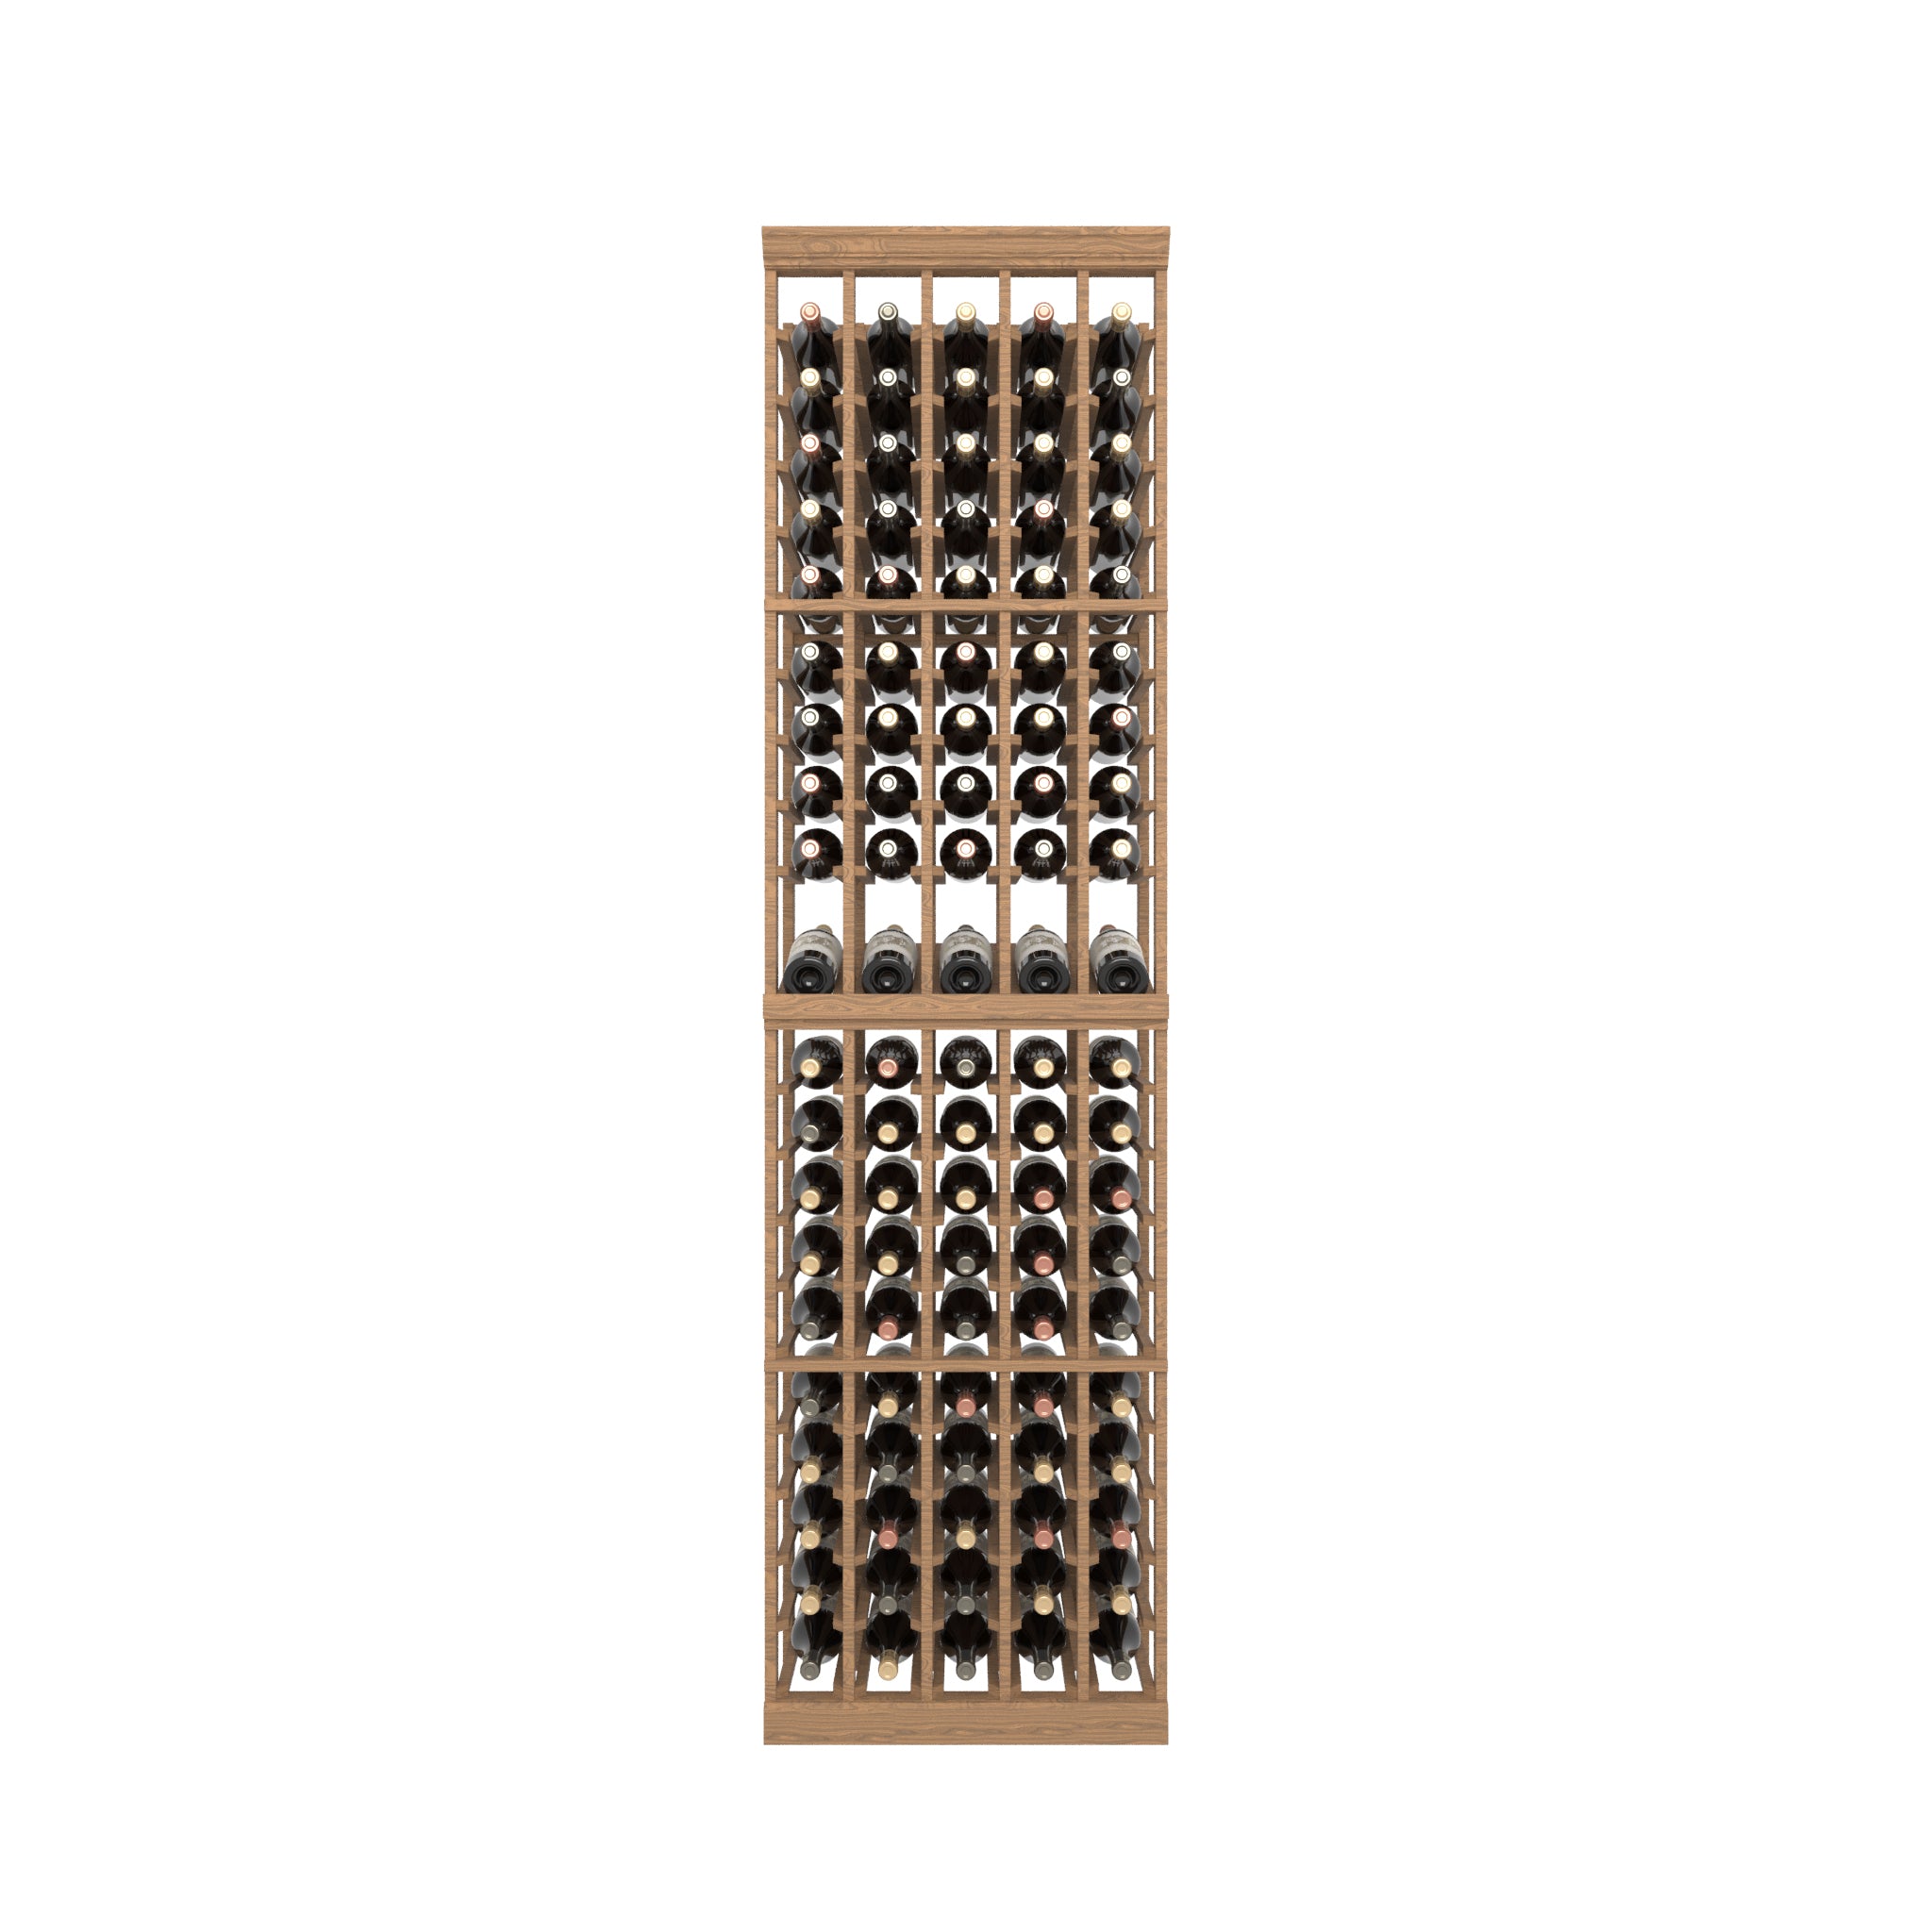 05 Column Rack with Display Row - 750ml Bottles